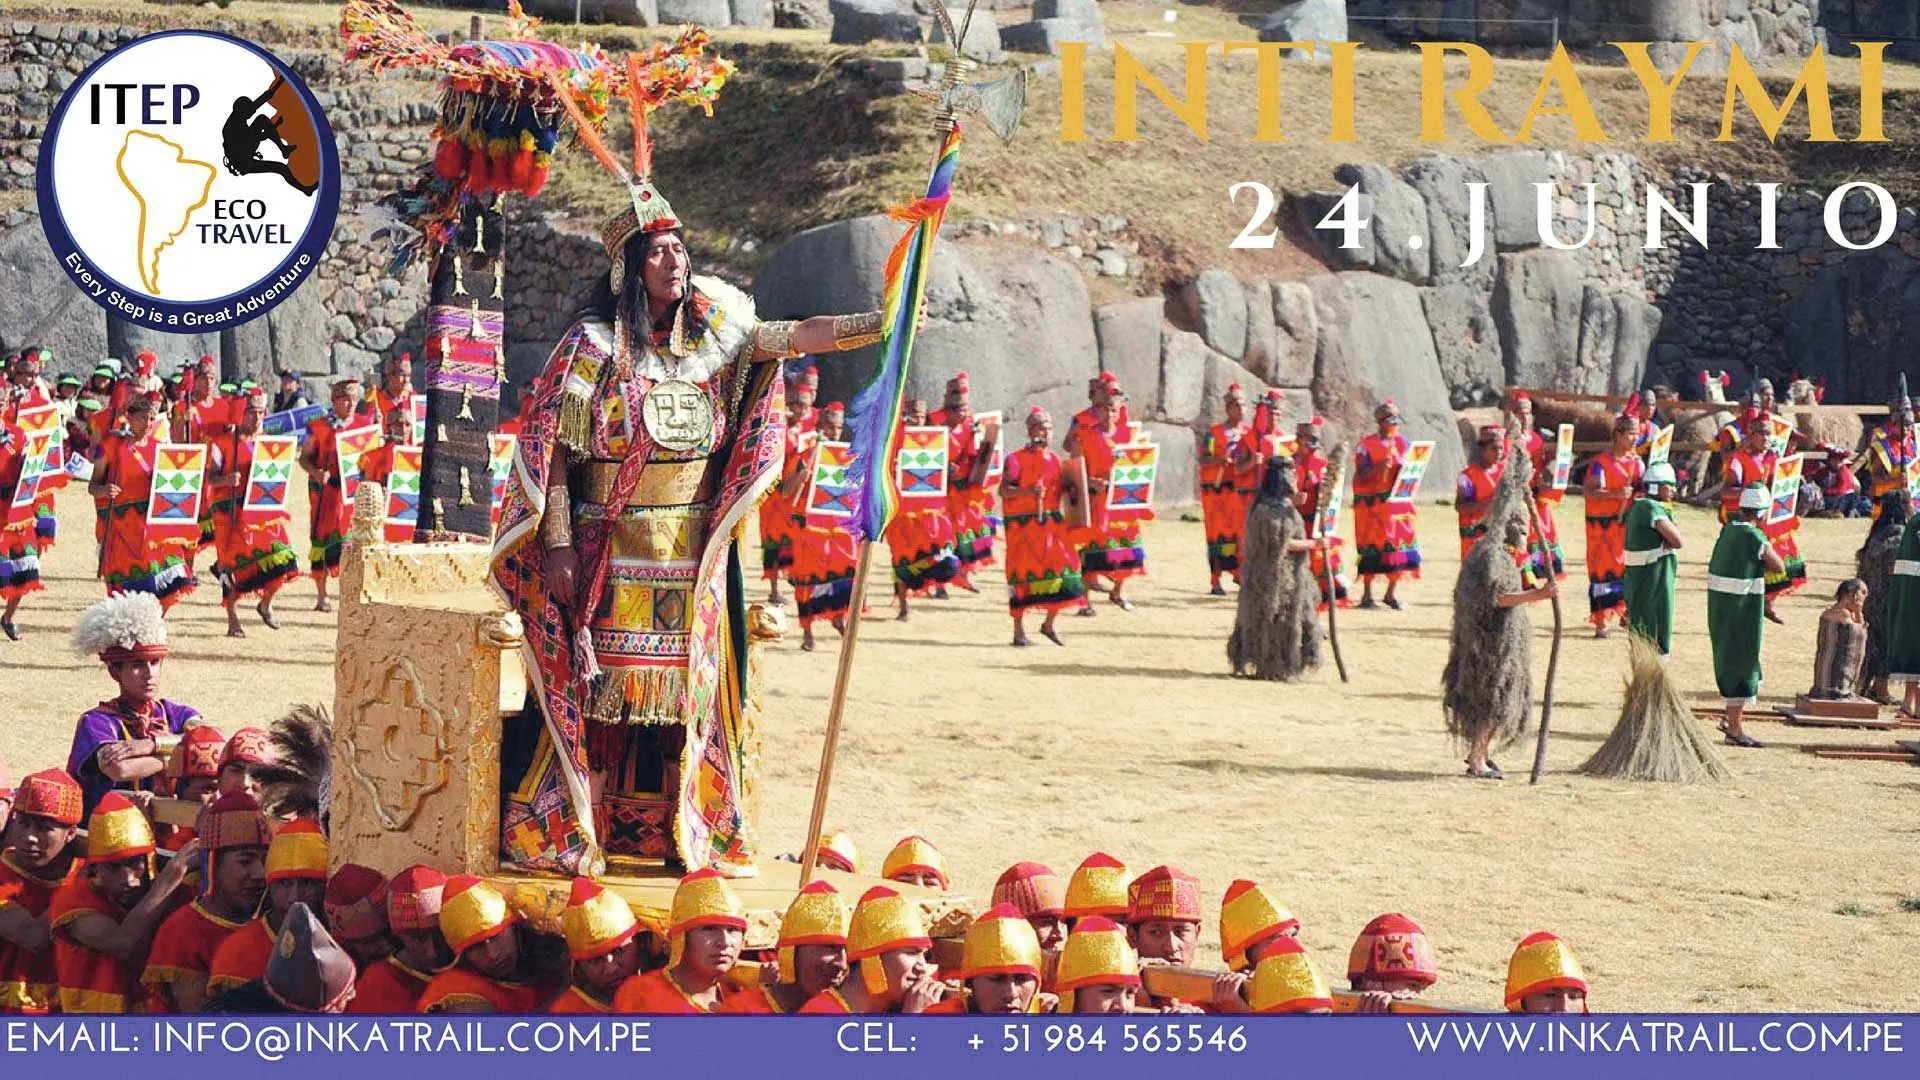 Cartel promocional Inkatrail, Inti Raymi, 2018.